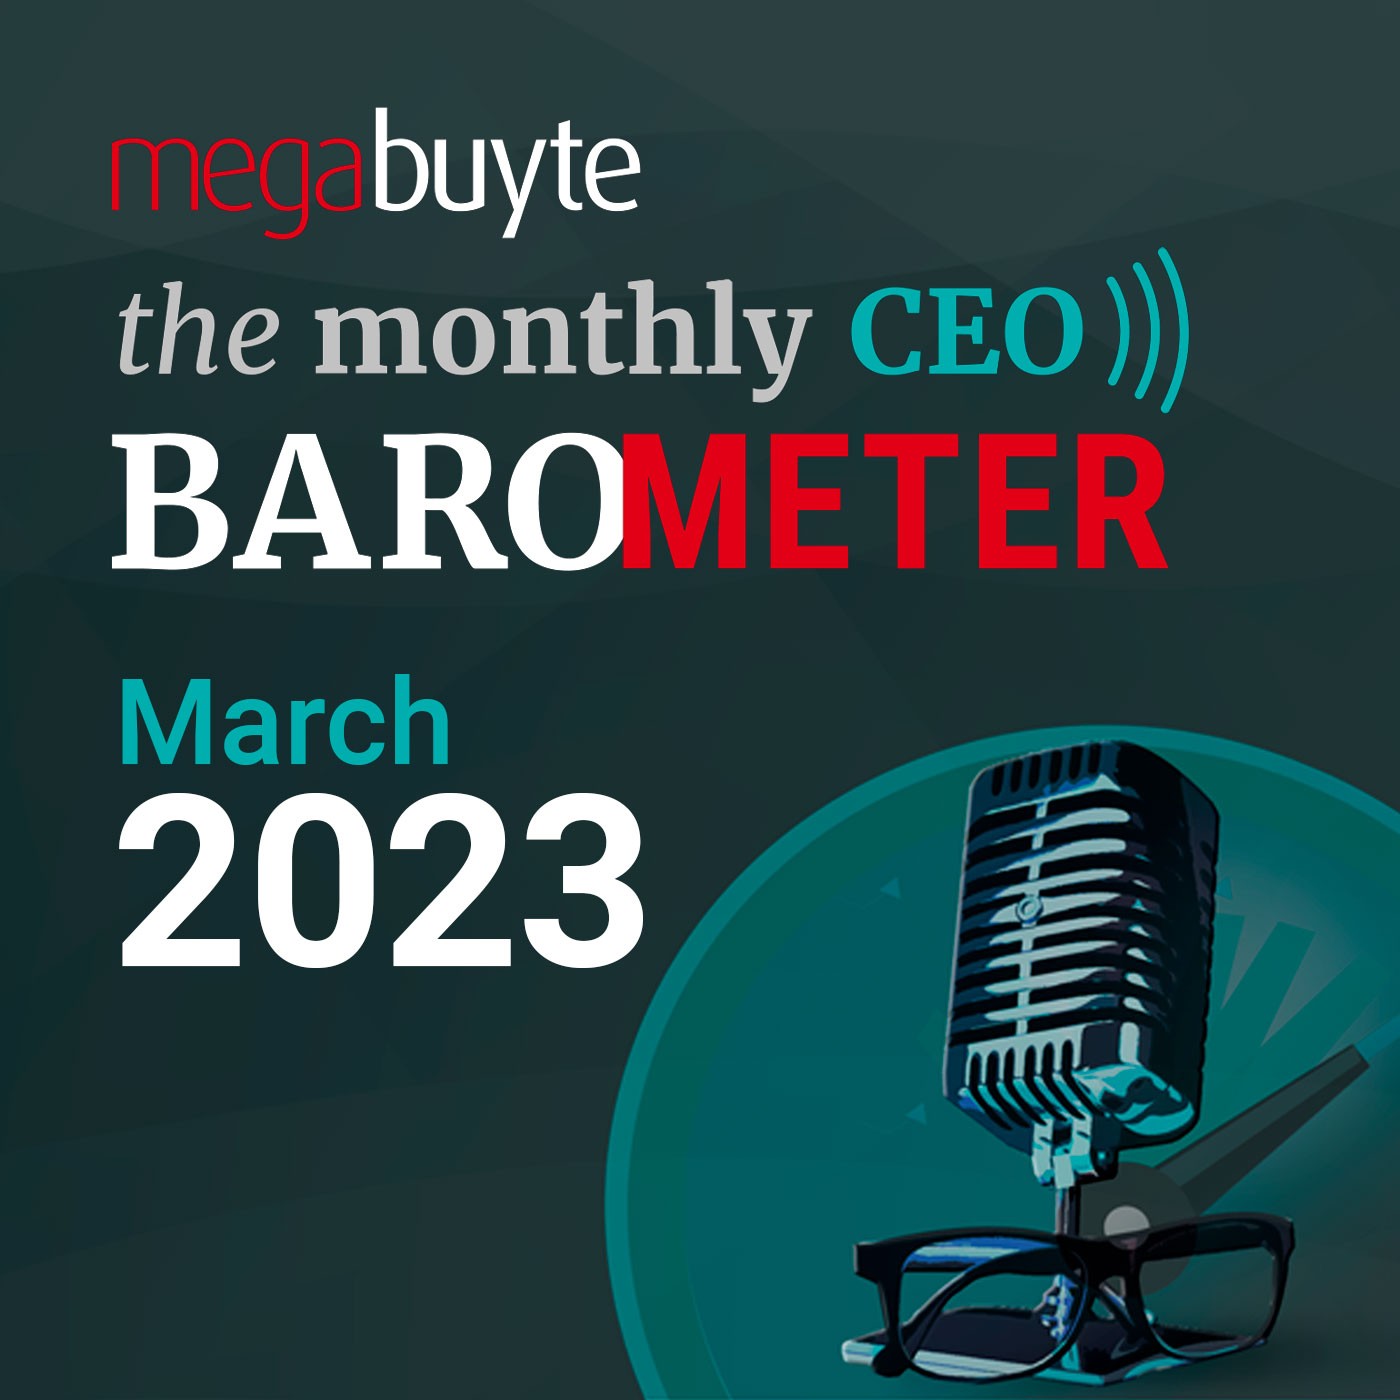 Megabuyte CEOBarometer - March 2023 update